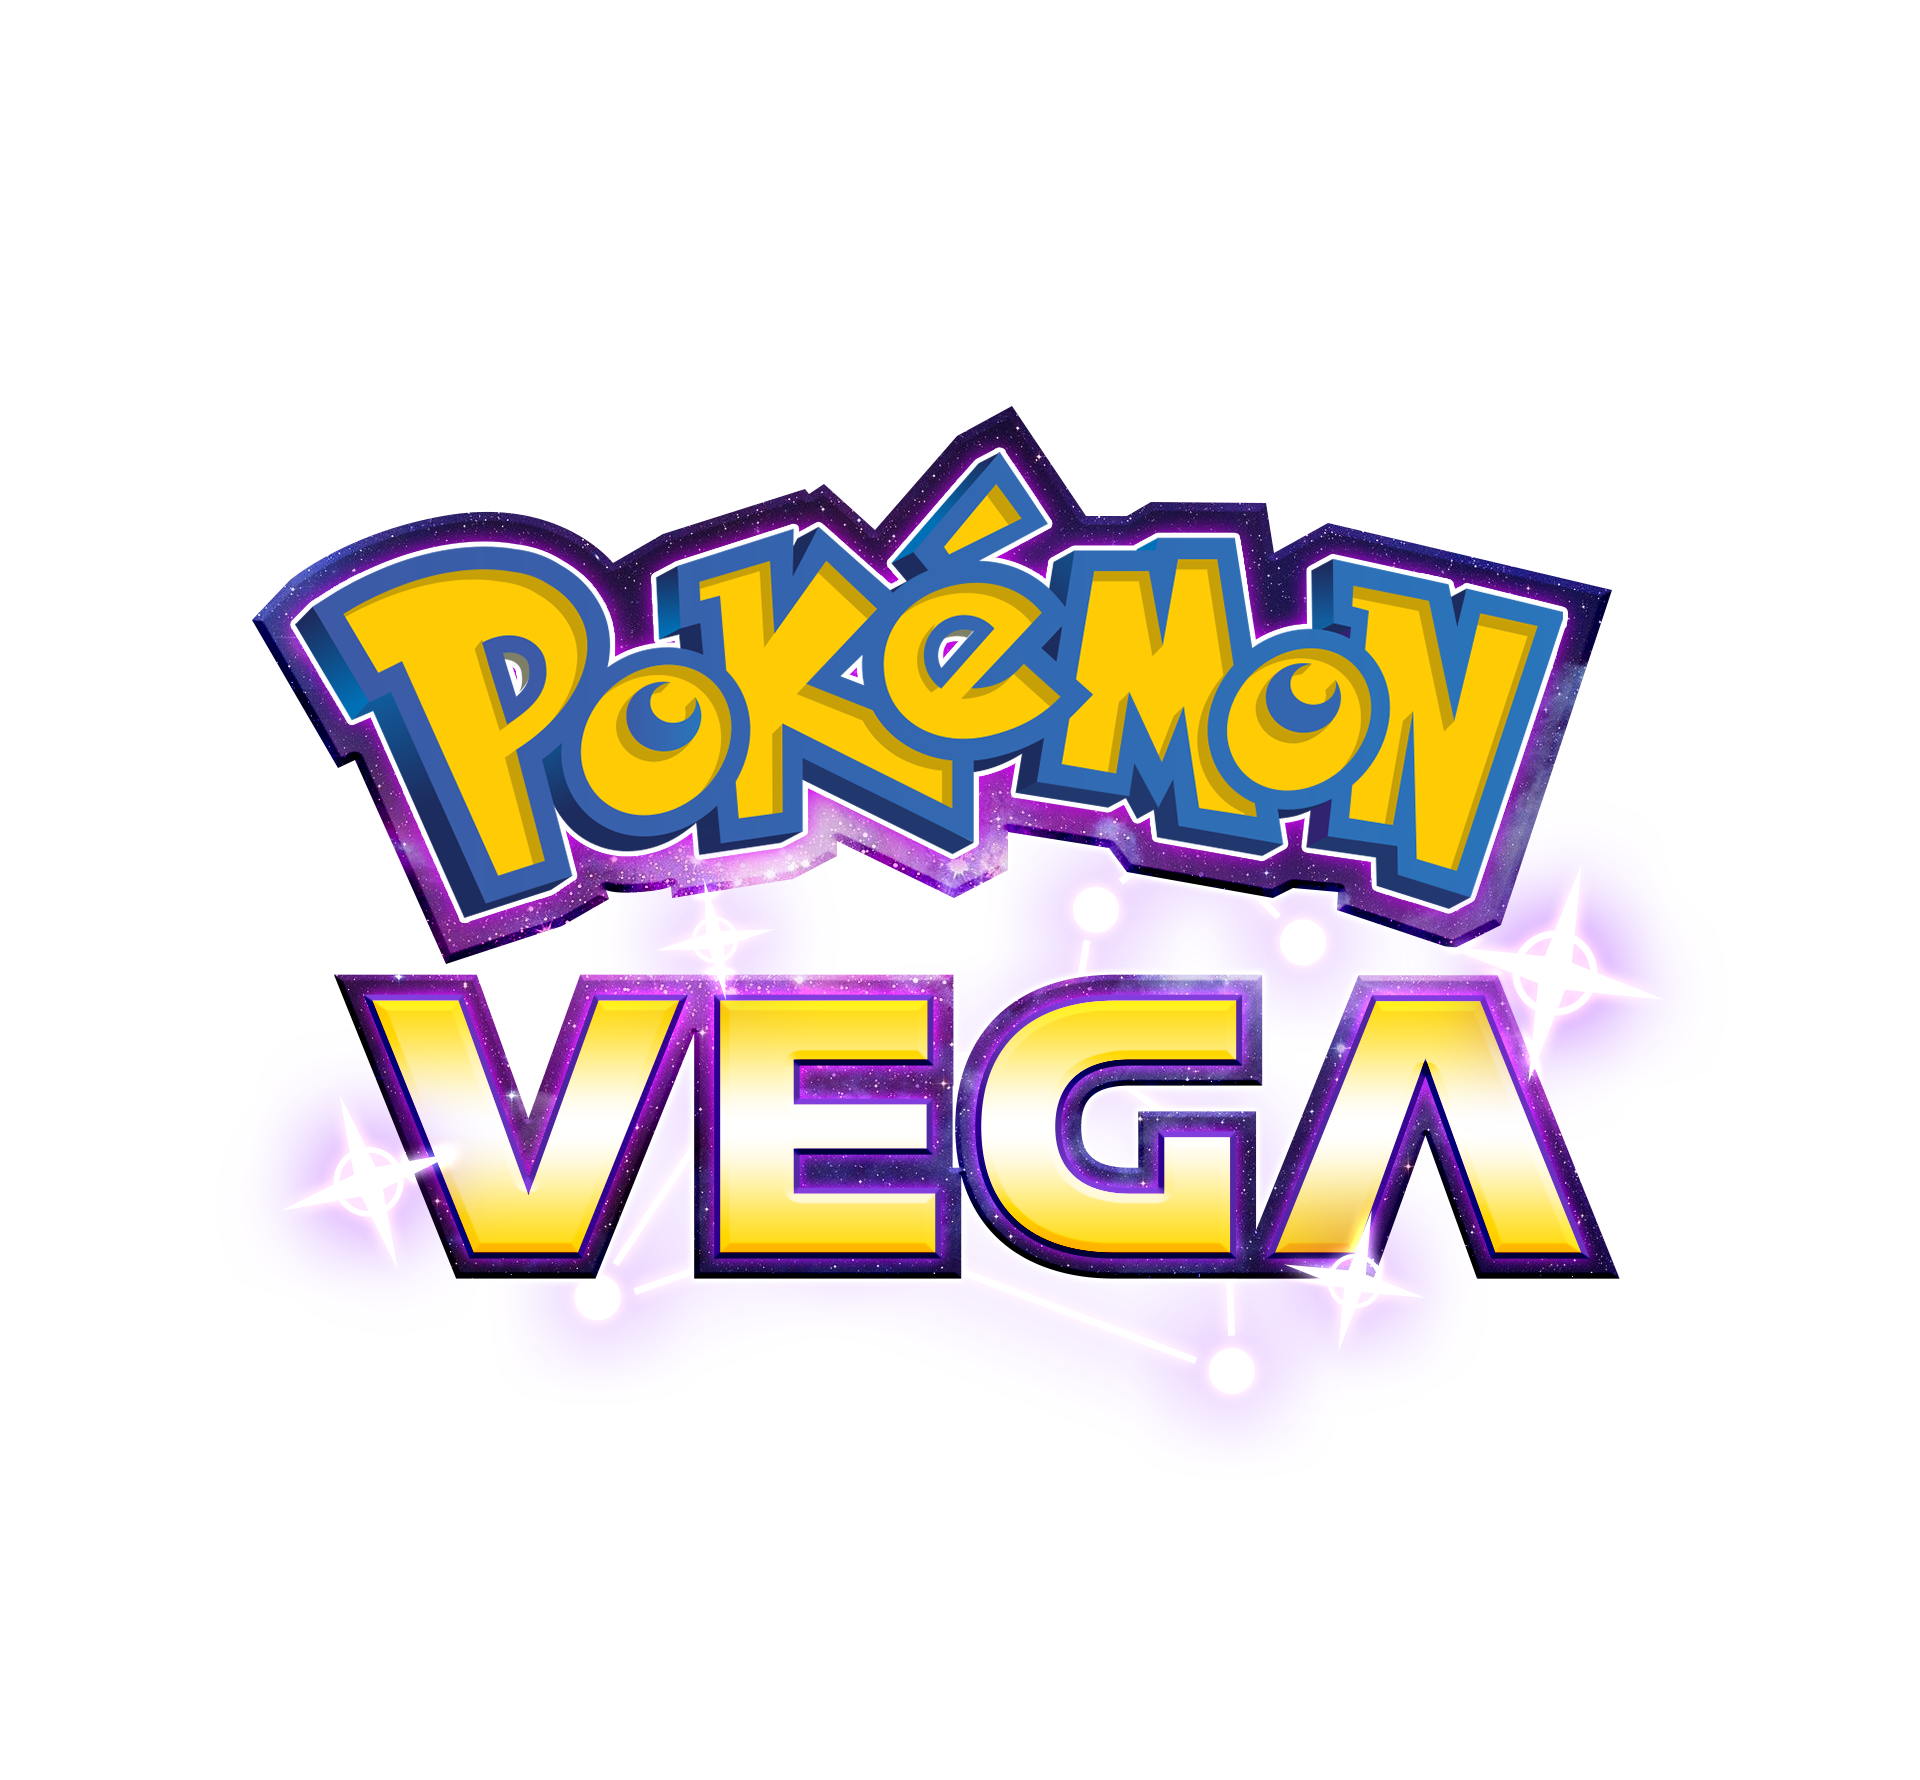 Pokemon Vega Nuzlocke! Banner Image